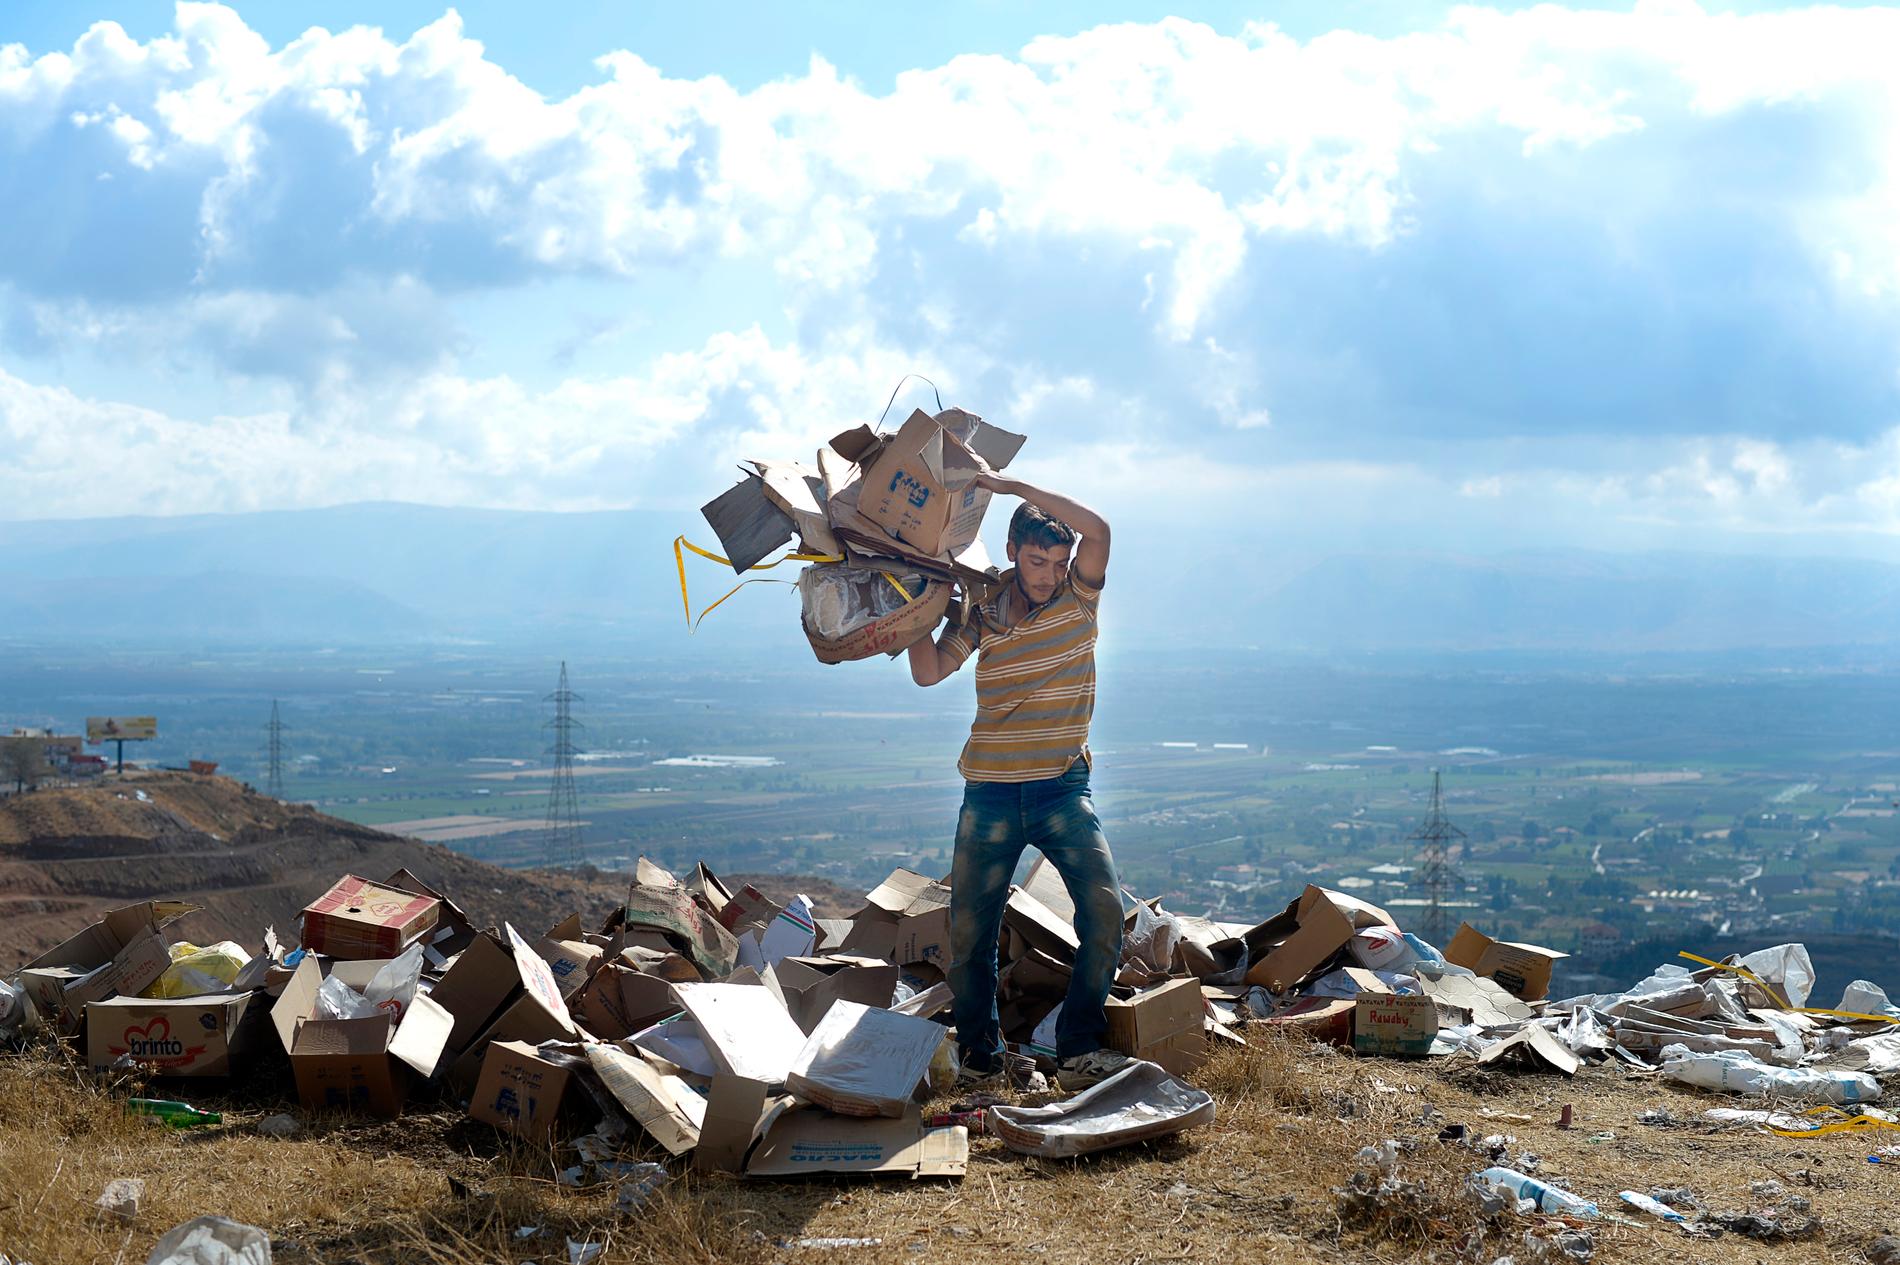 Ali Ahmed Ali, 27, från Syrien sorterar sopor i Libanon. Urban Andersson tog bilden.